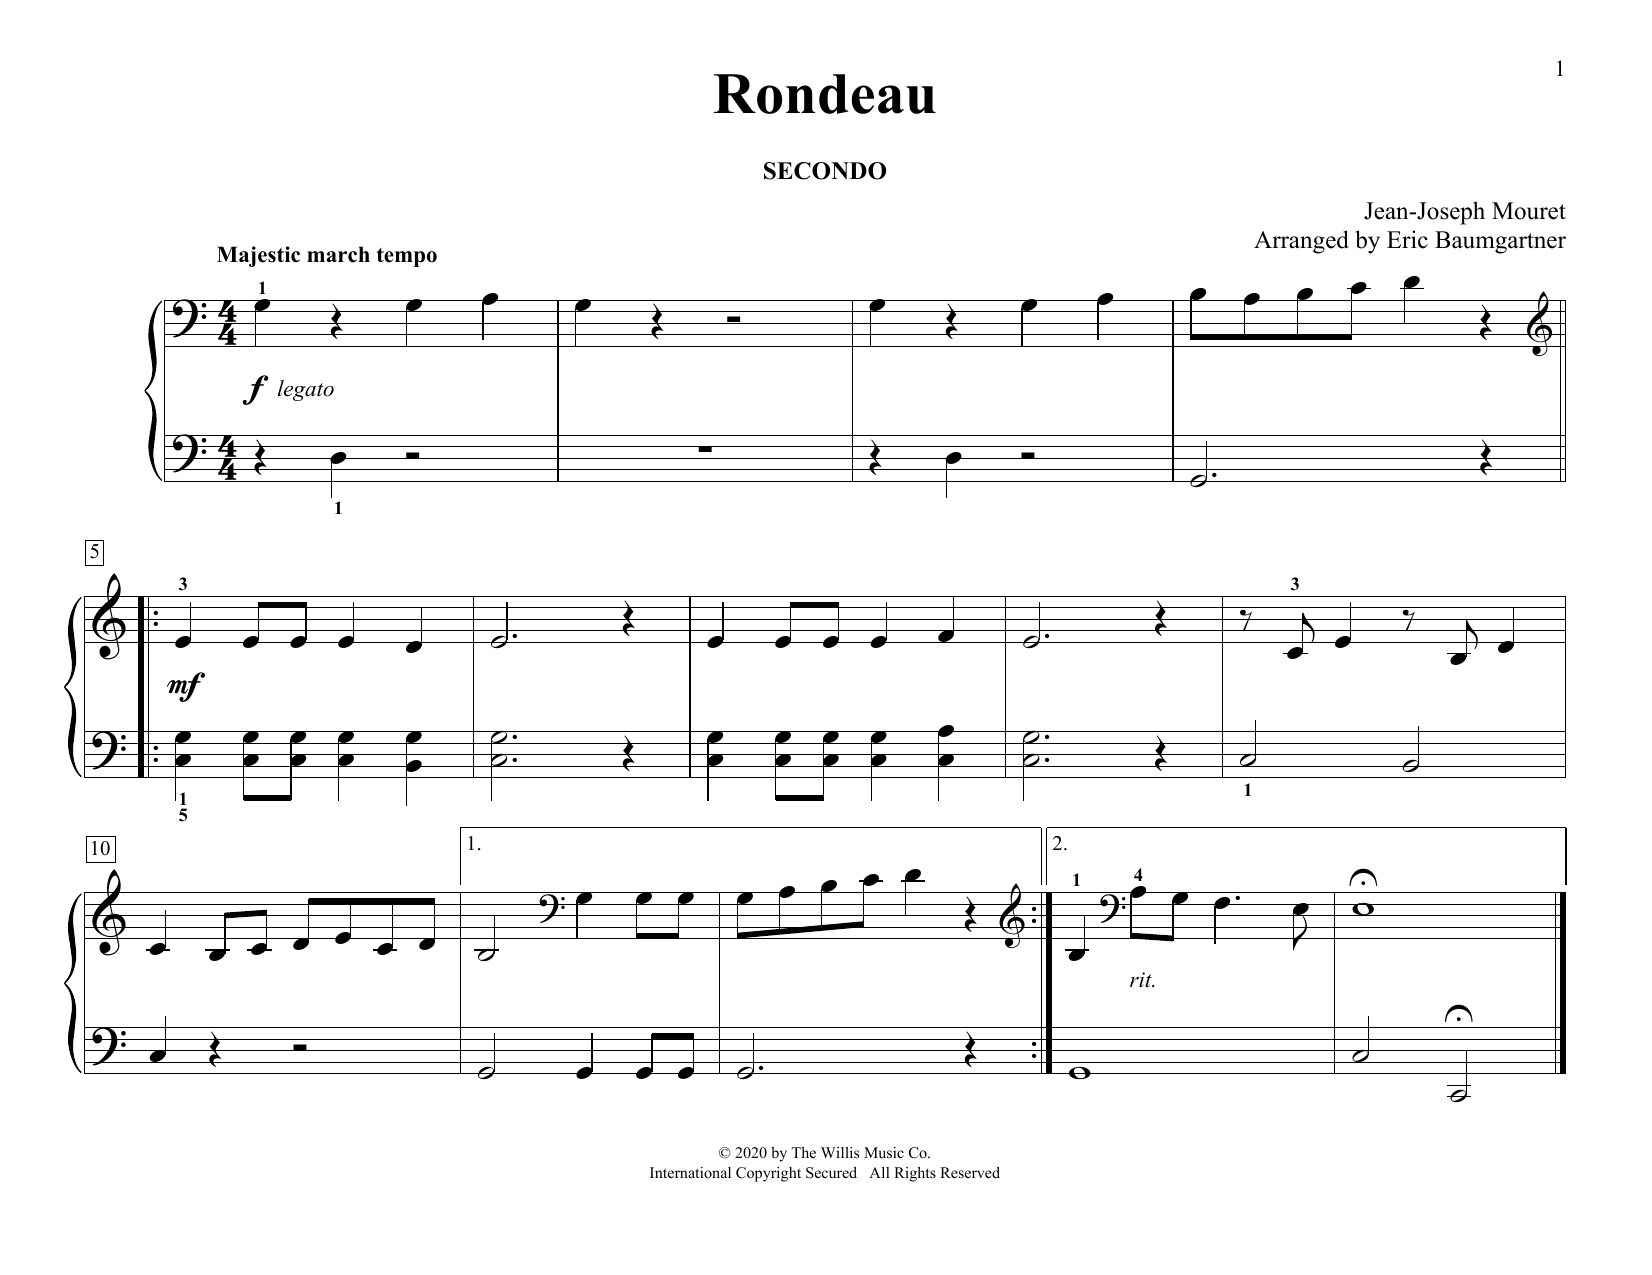 Jean-Joseph Mouret Rondeau (arr. Eric Baumgartner) Sheet Music Notes & Chords for Piano Duet - Download or Print PDF